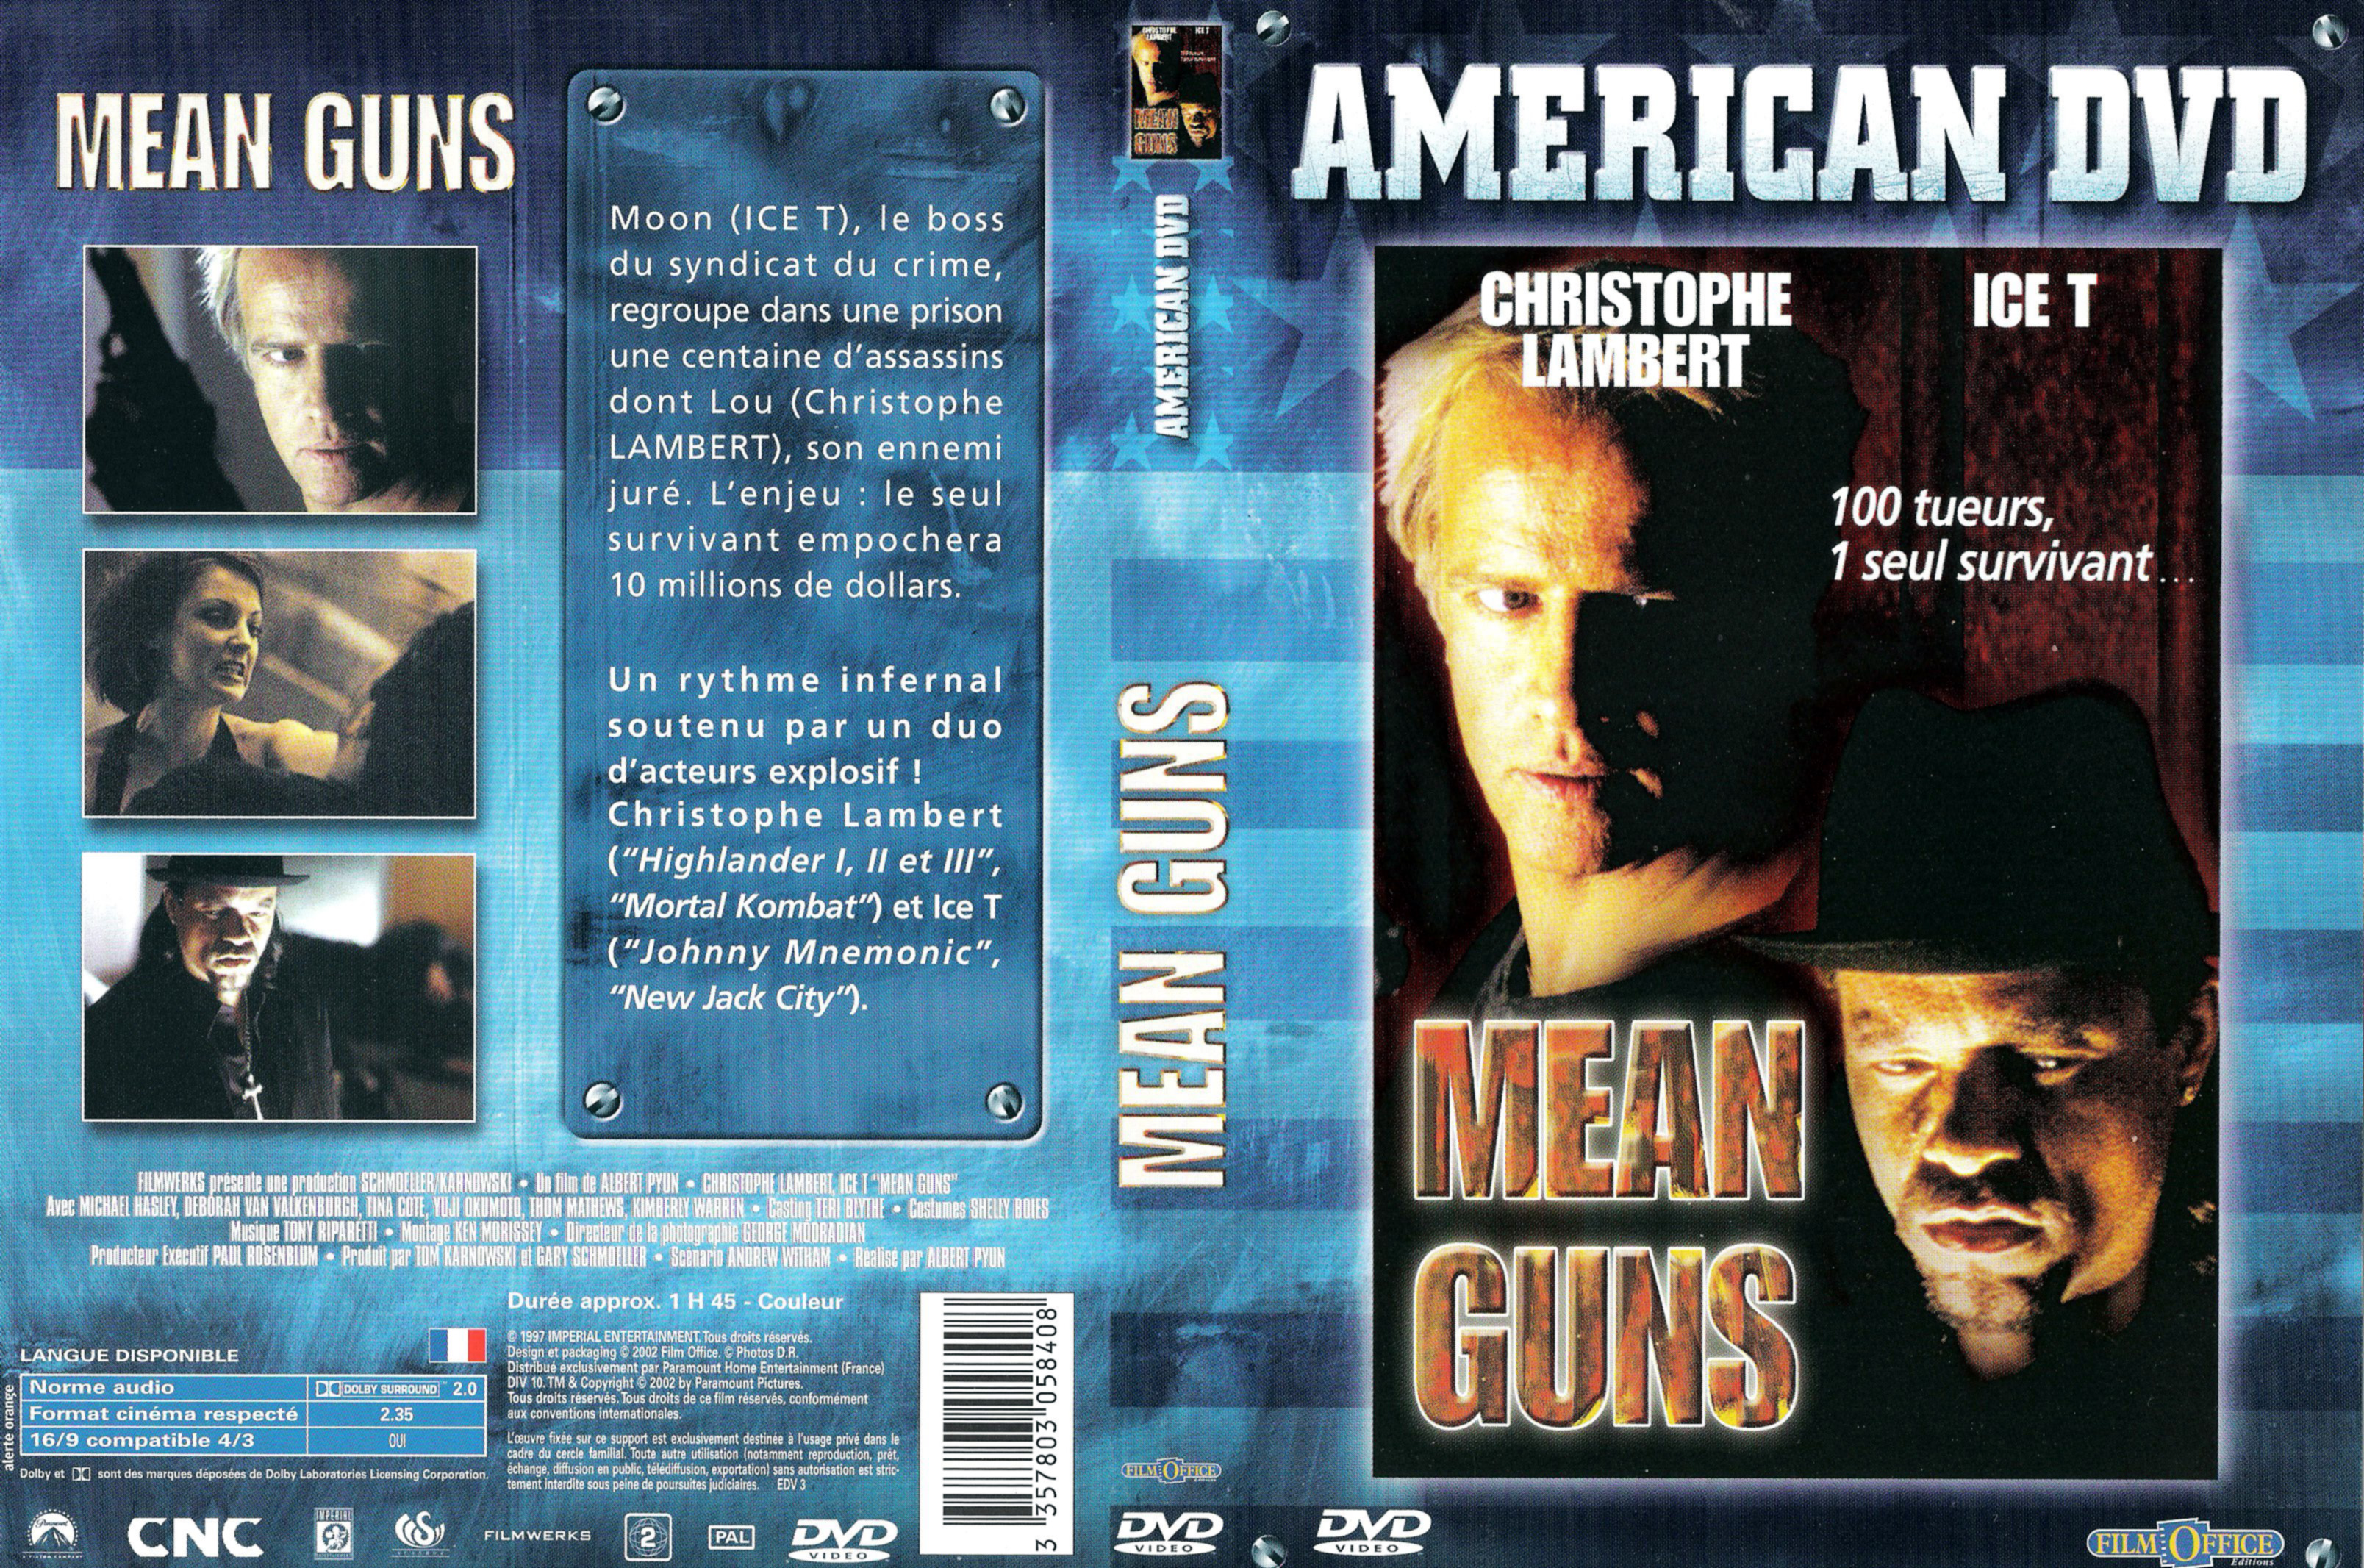 Jaquette DVD Mean guns v2